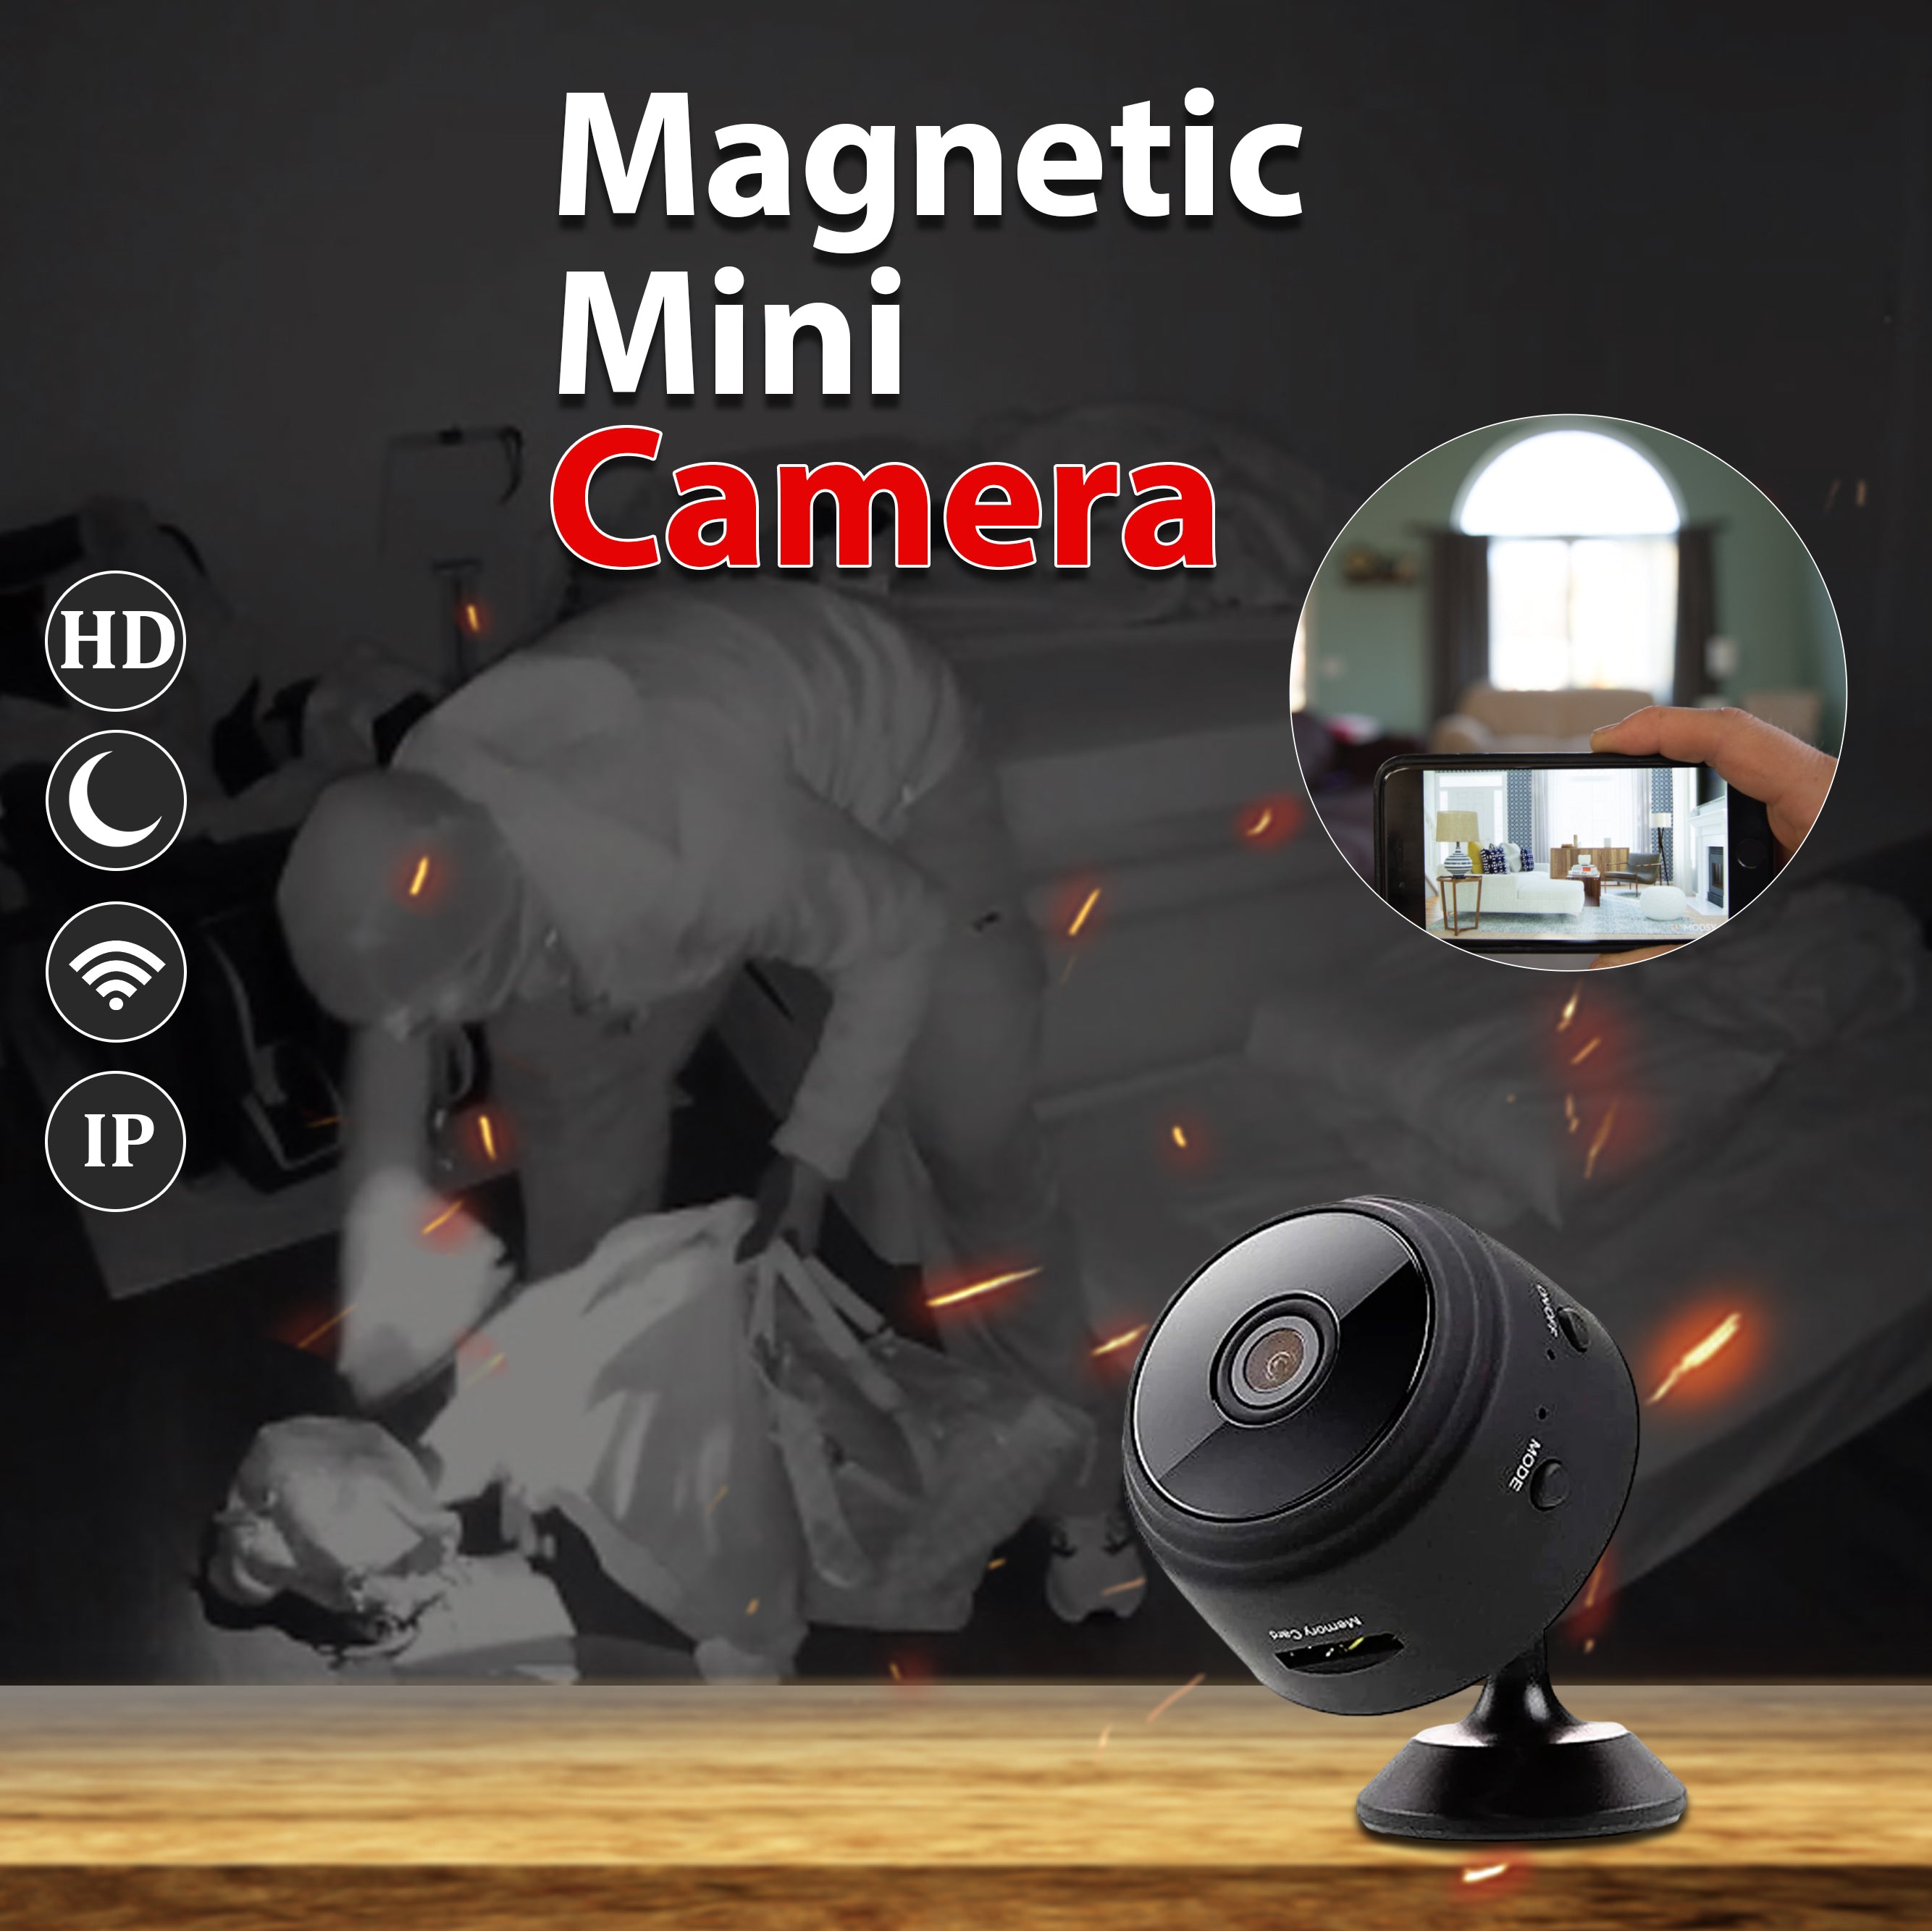 Magnetic Mini Camera